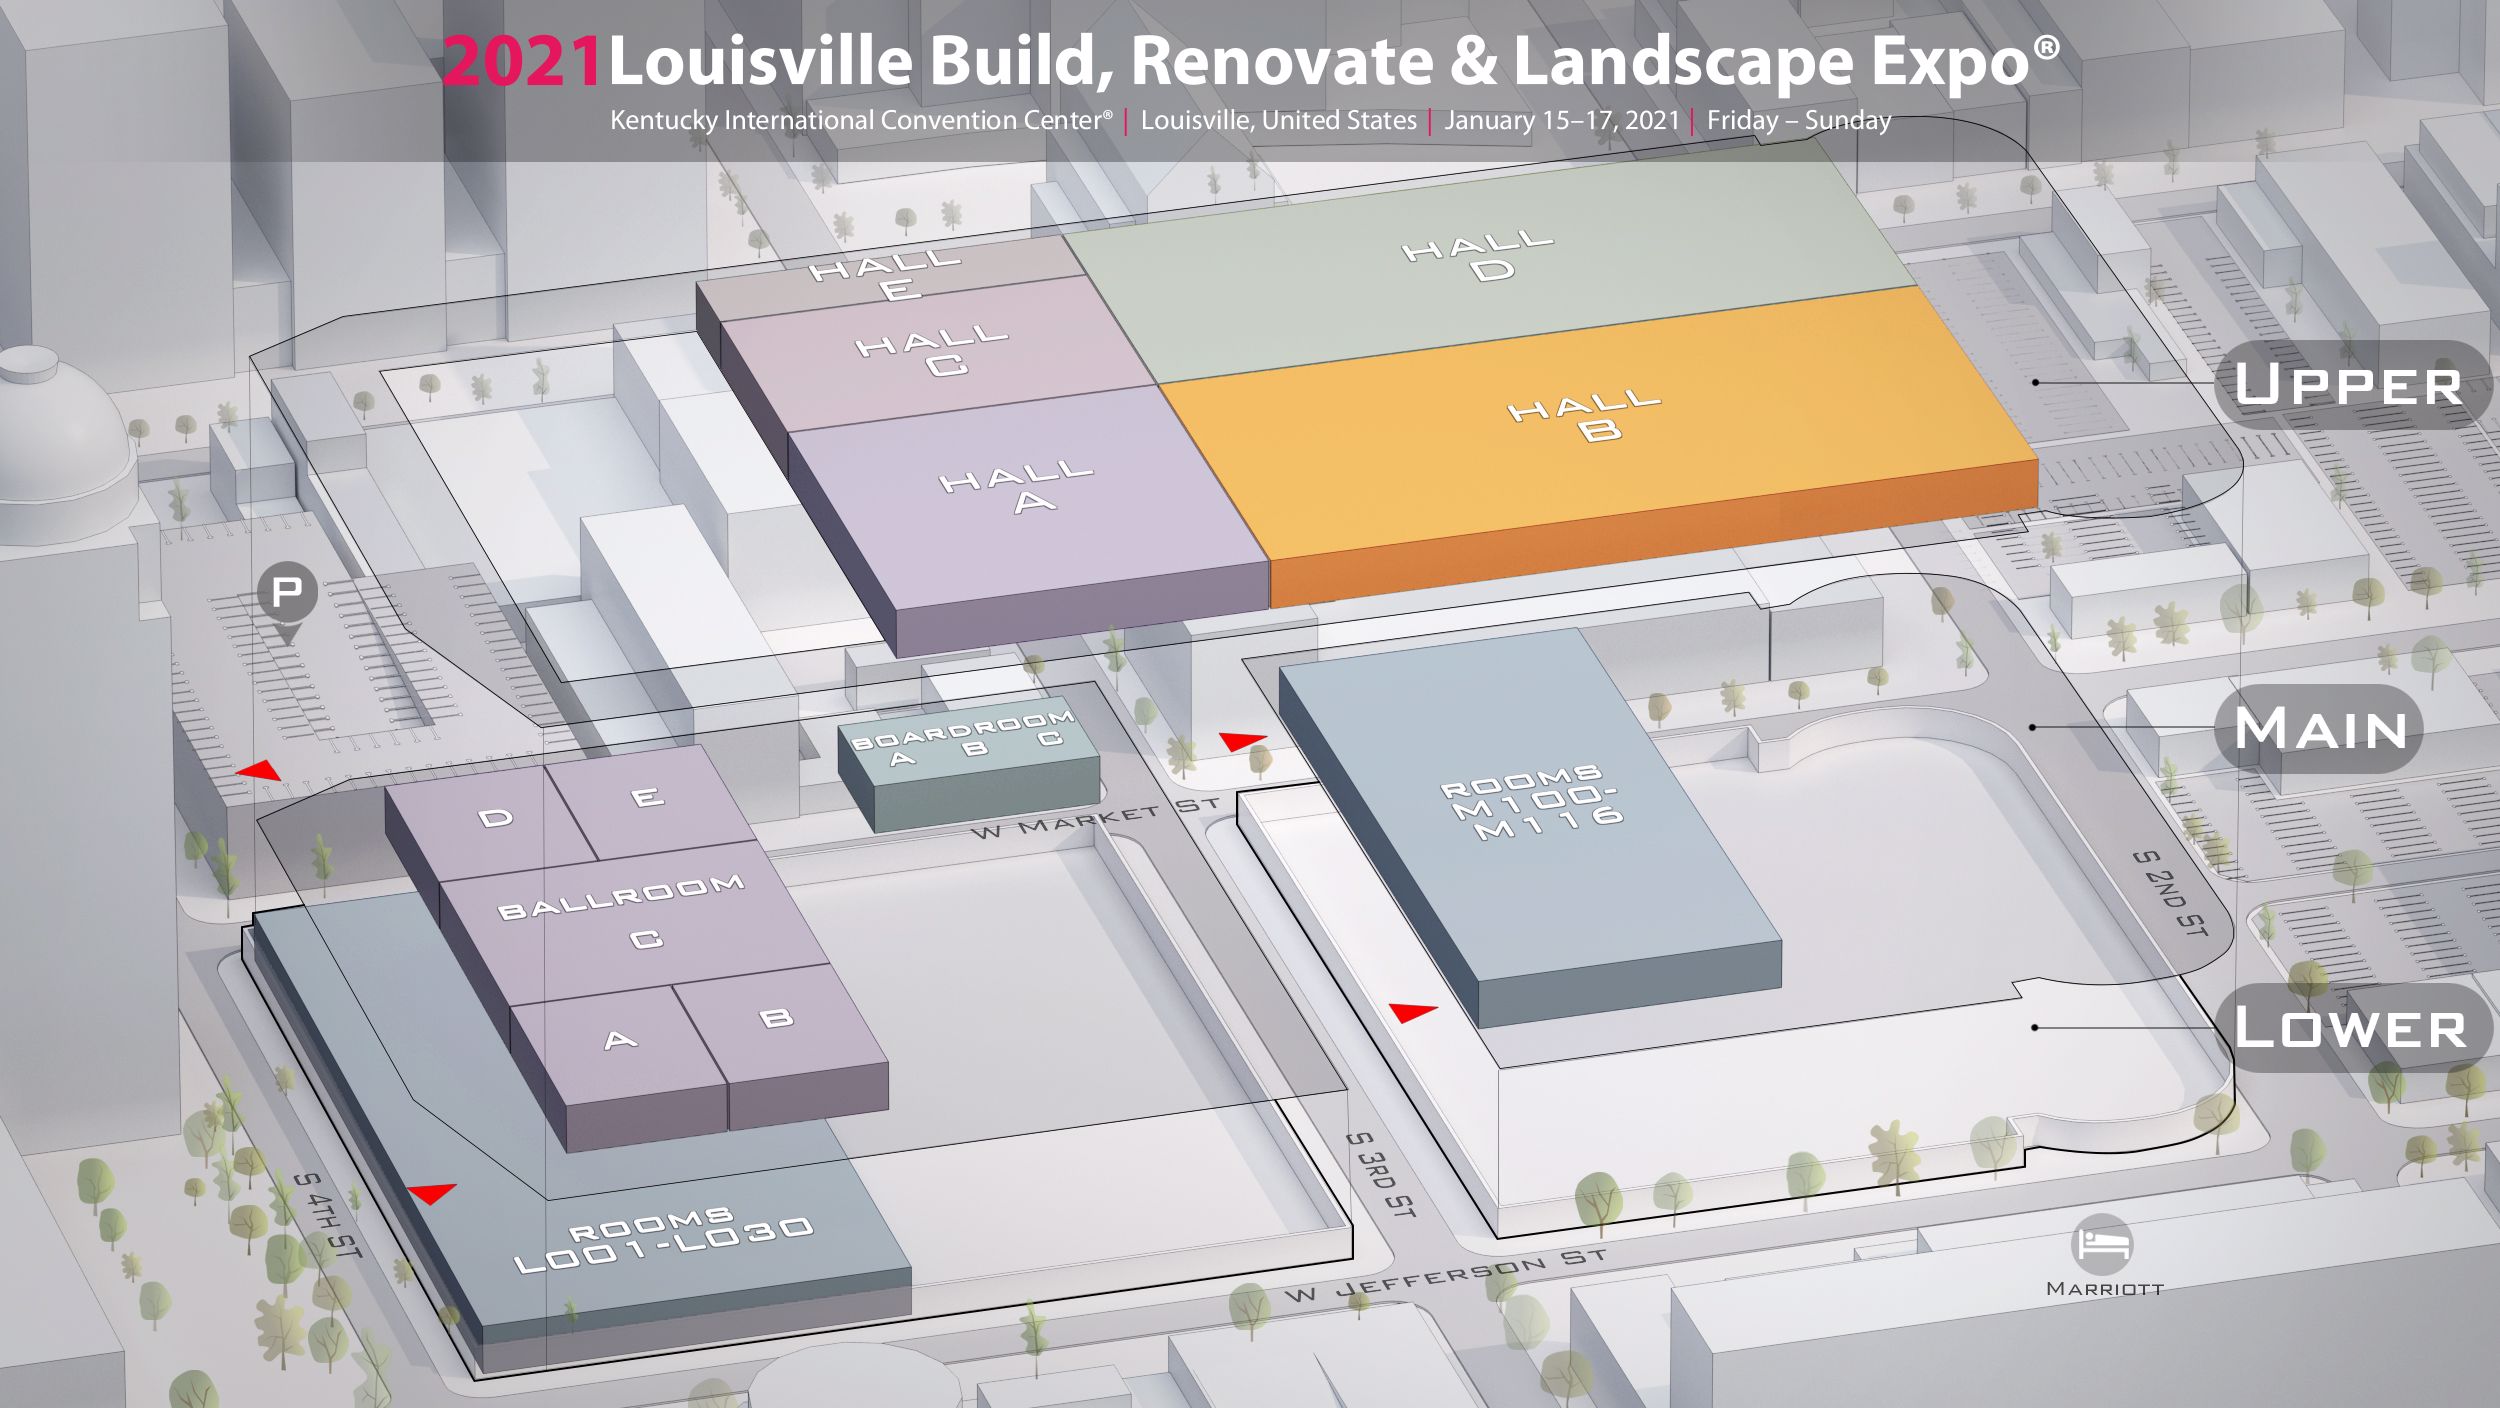 Louisville Build, Renovate & Landscape Expo 2021 in